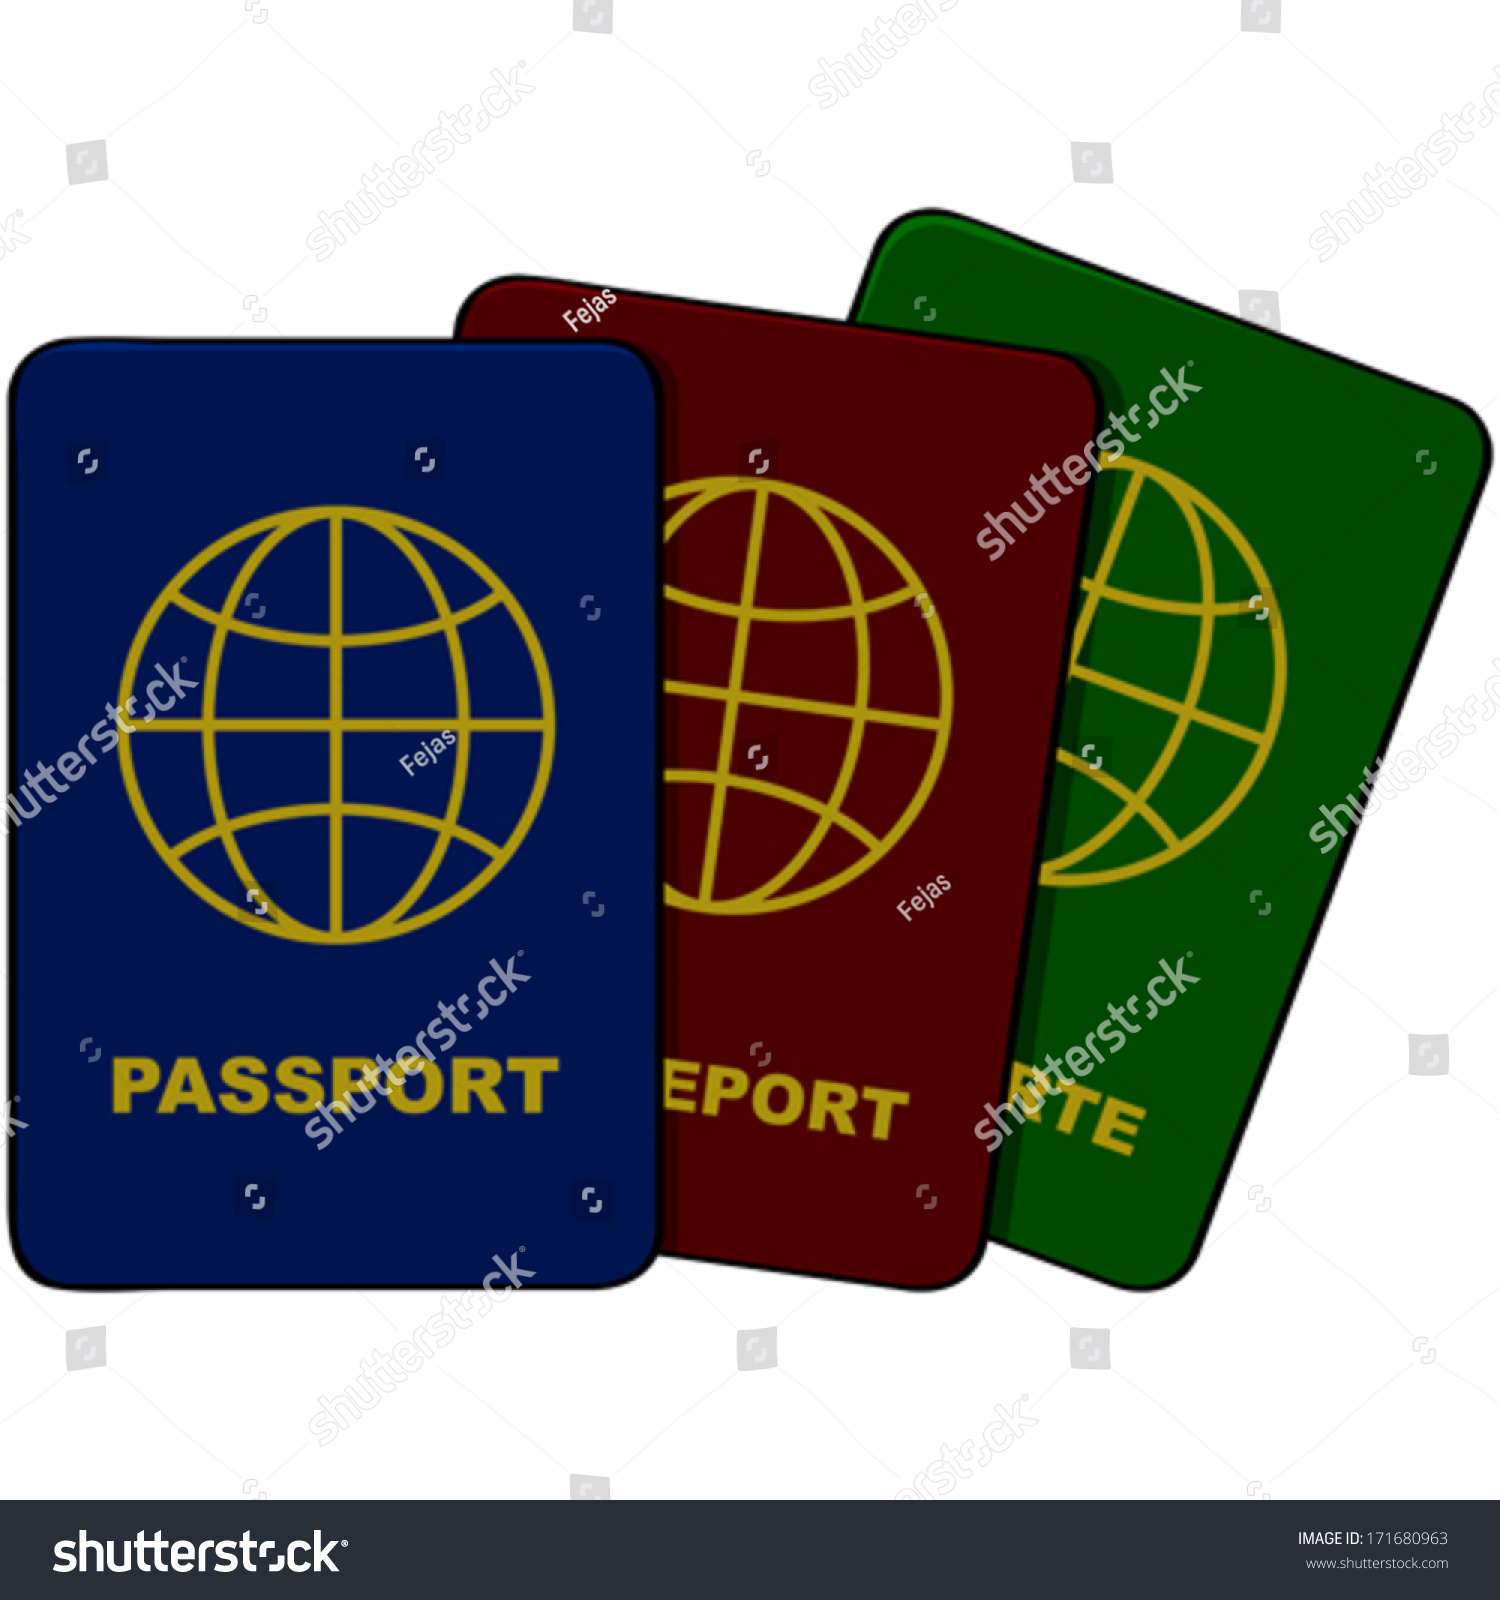 Cartoon Vector Illustration Showing Three Passports Stock Vector Royalty Free 171680963 2119